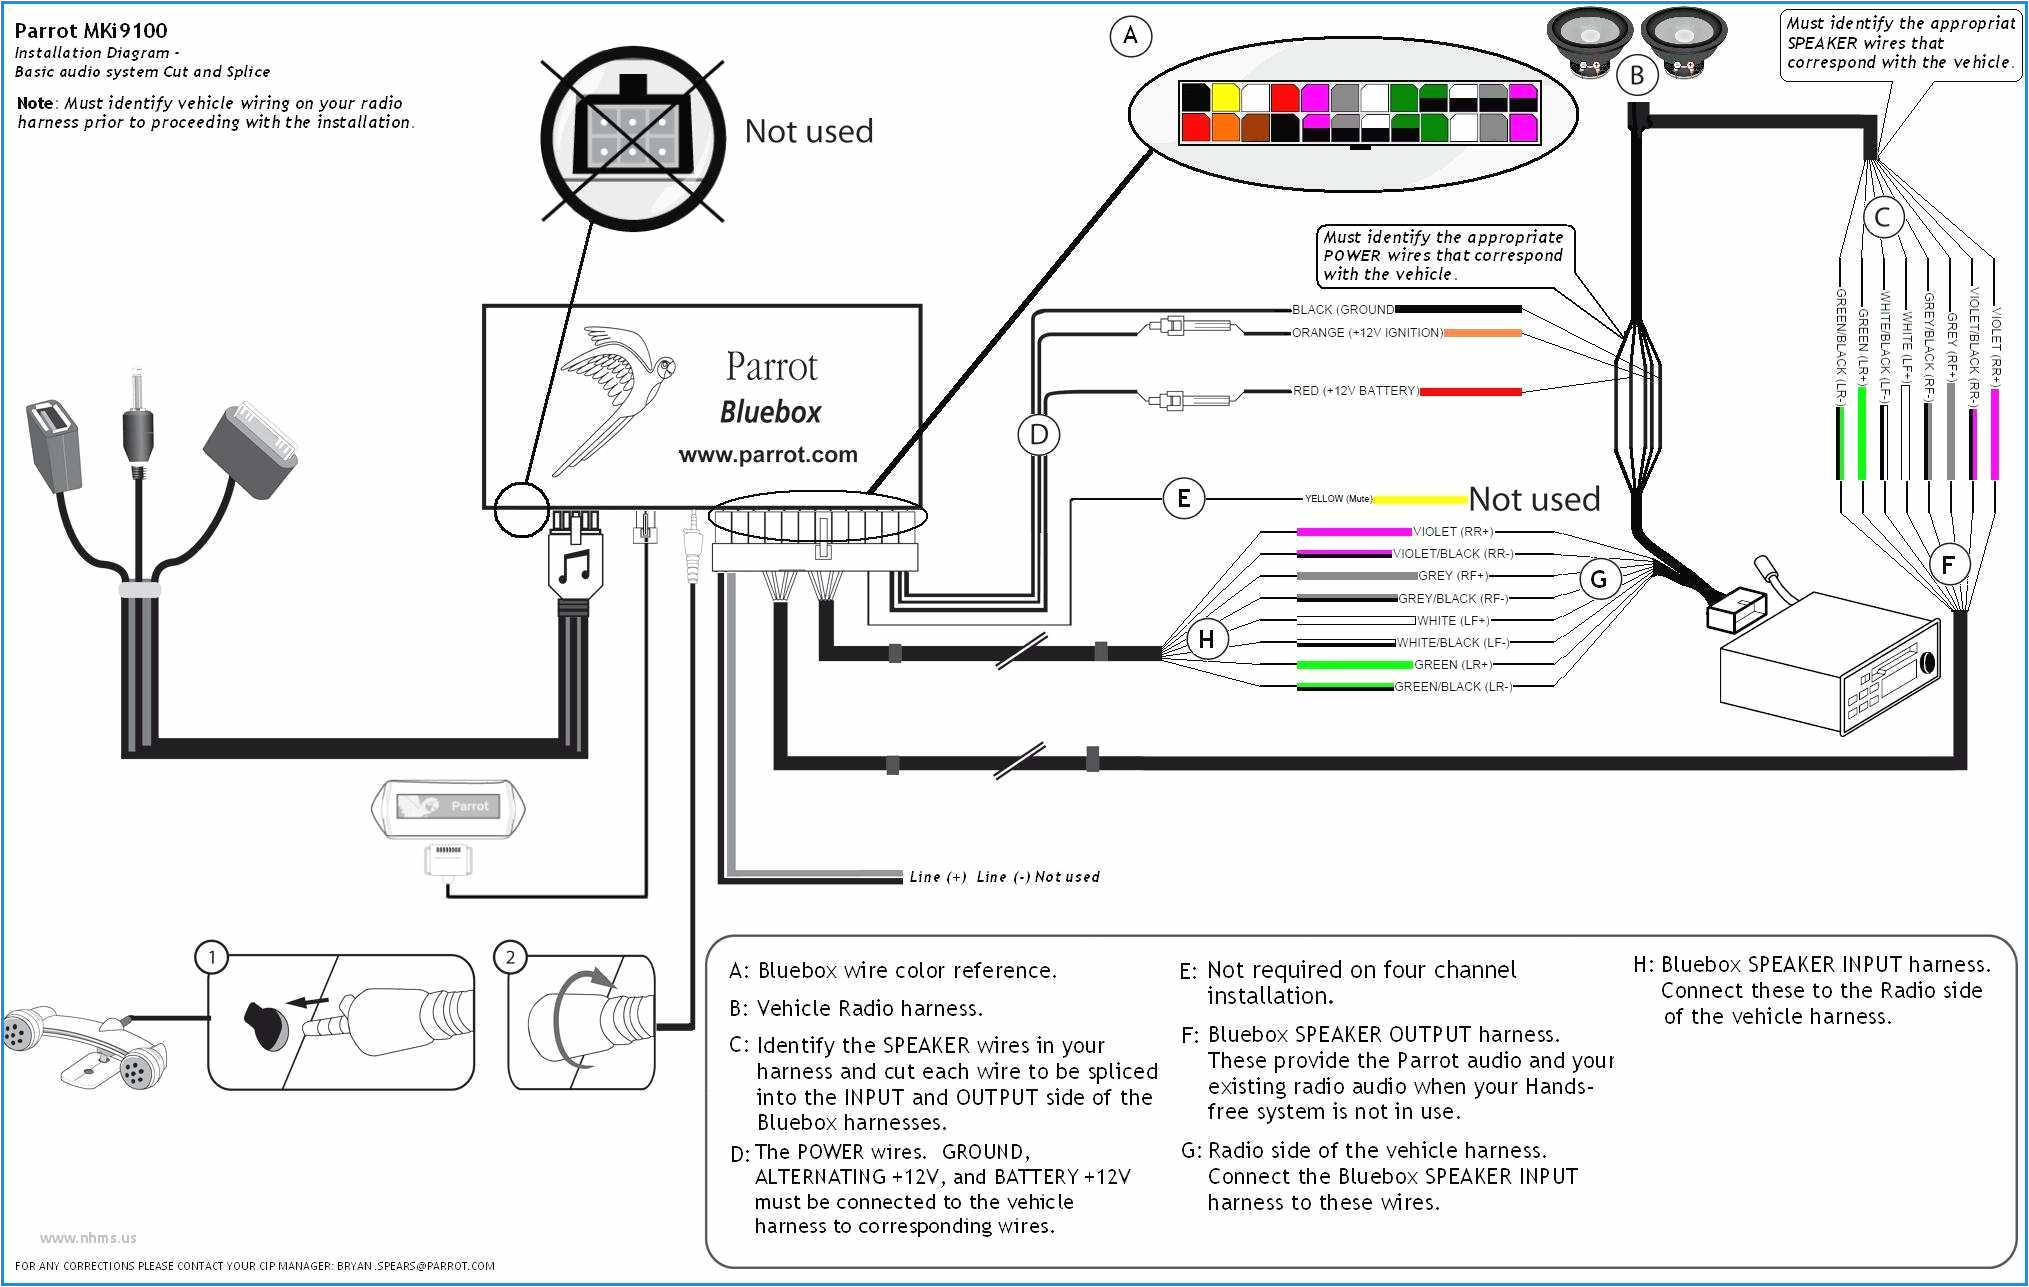 parrot ck3200 wiring diagram beautiful parrot mki9200 installation wiring diagram reference wiring diagram